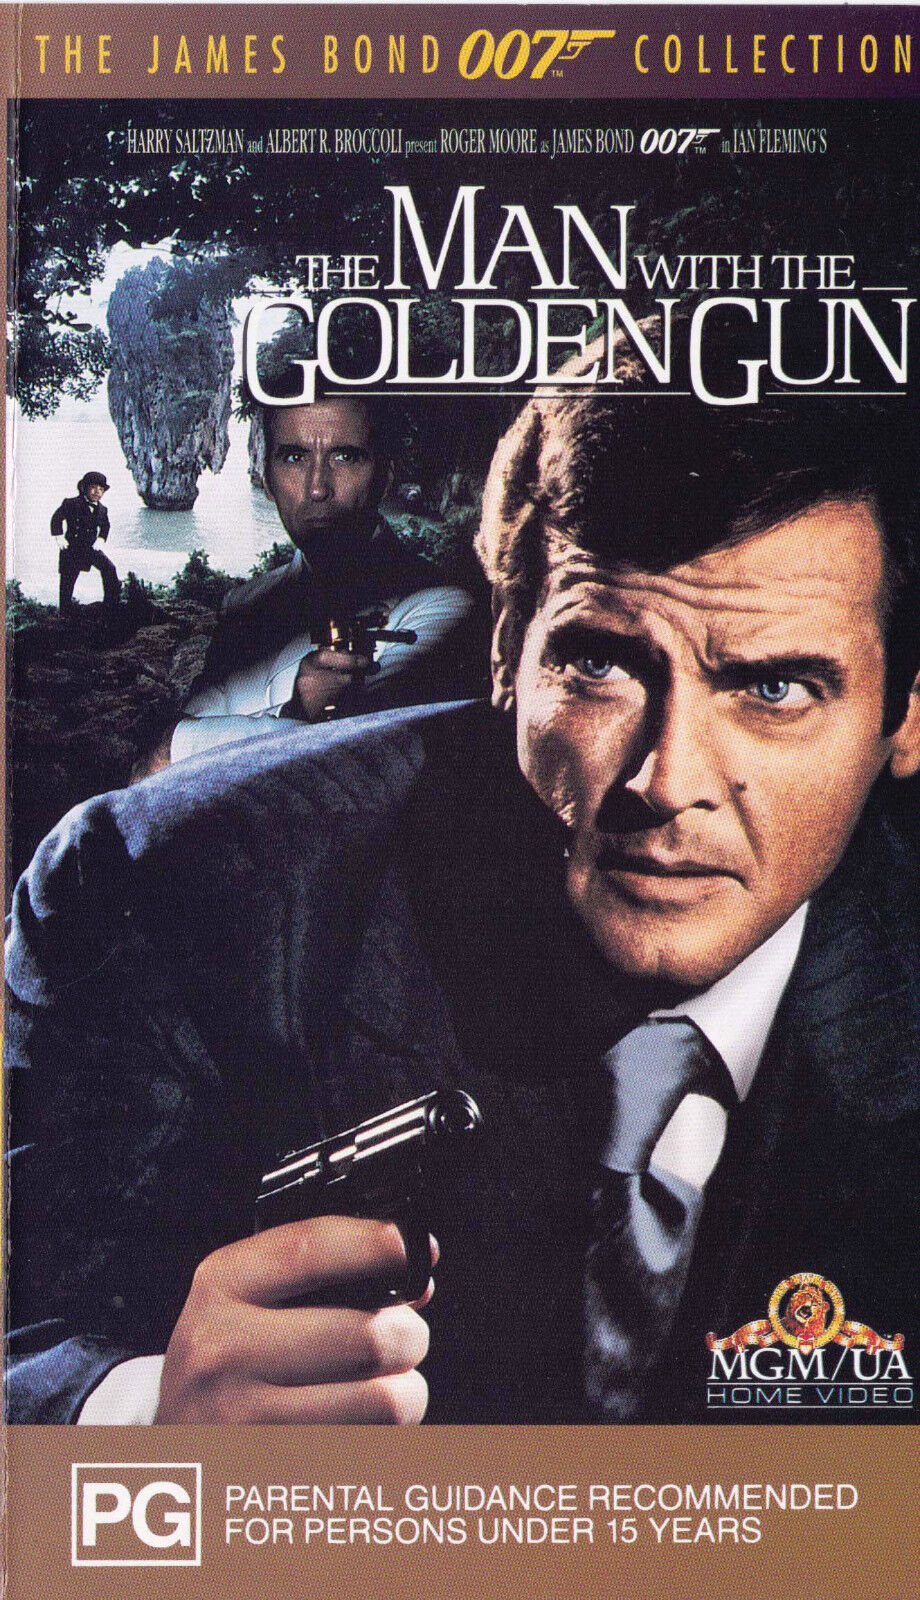 JAMES BOND 007 The Man With The Golden Gun - Video VHS Pal SirH70